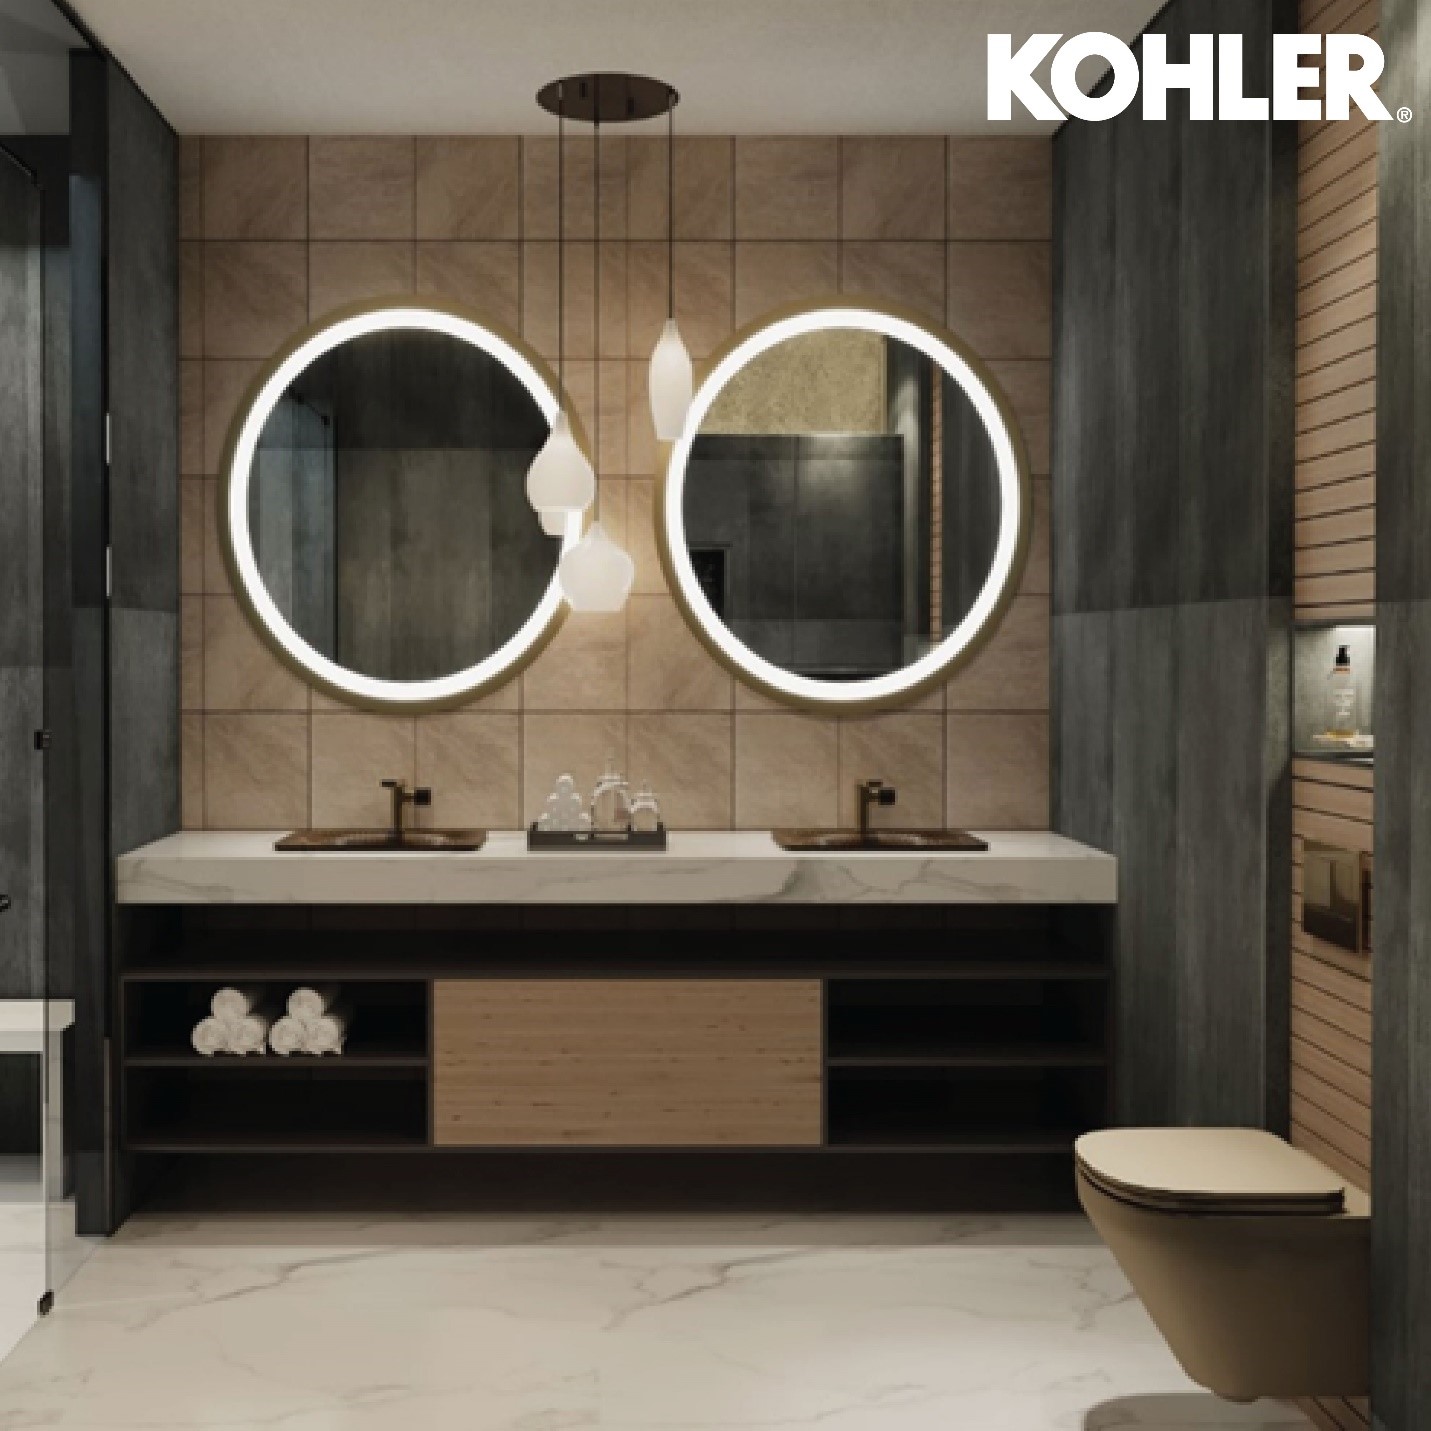 Kohler vanity mirror